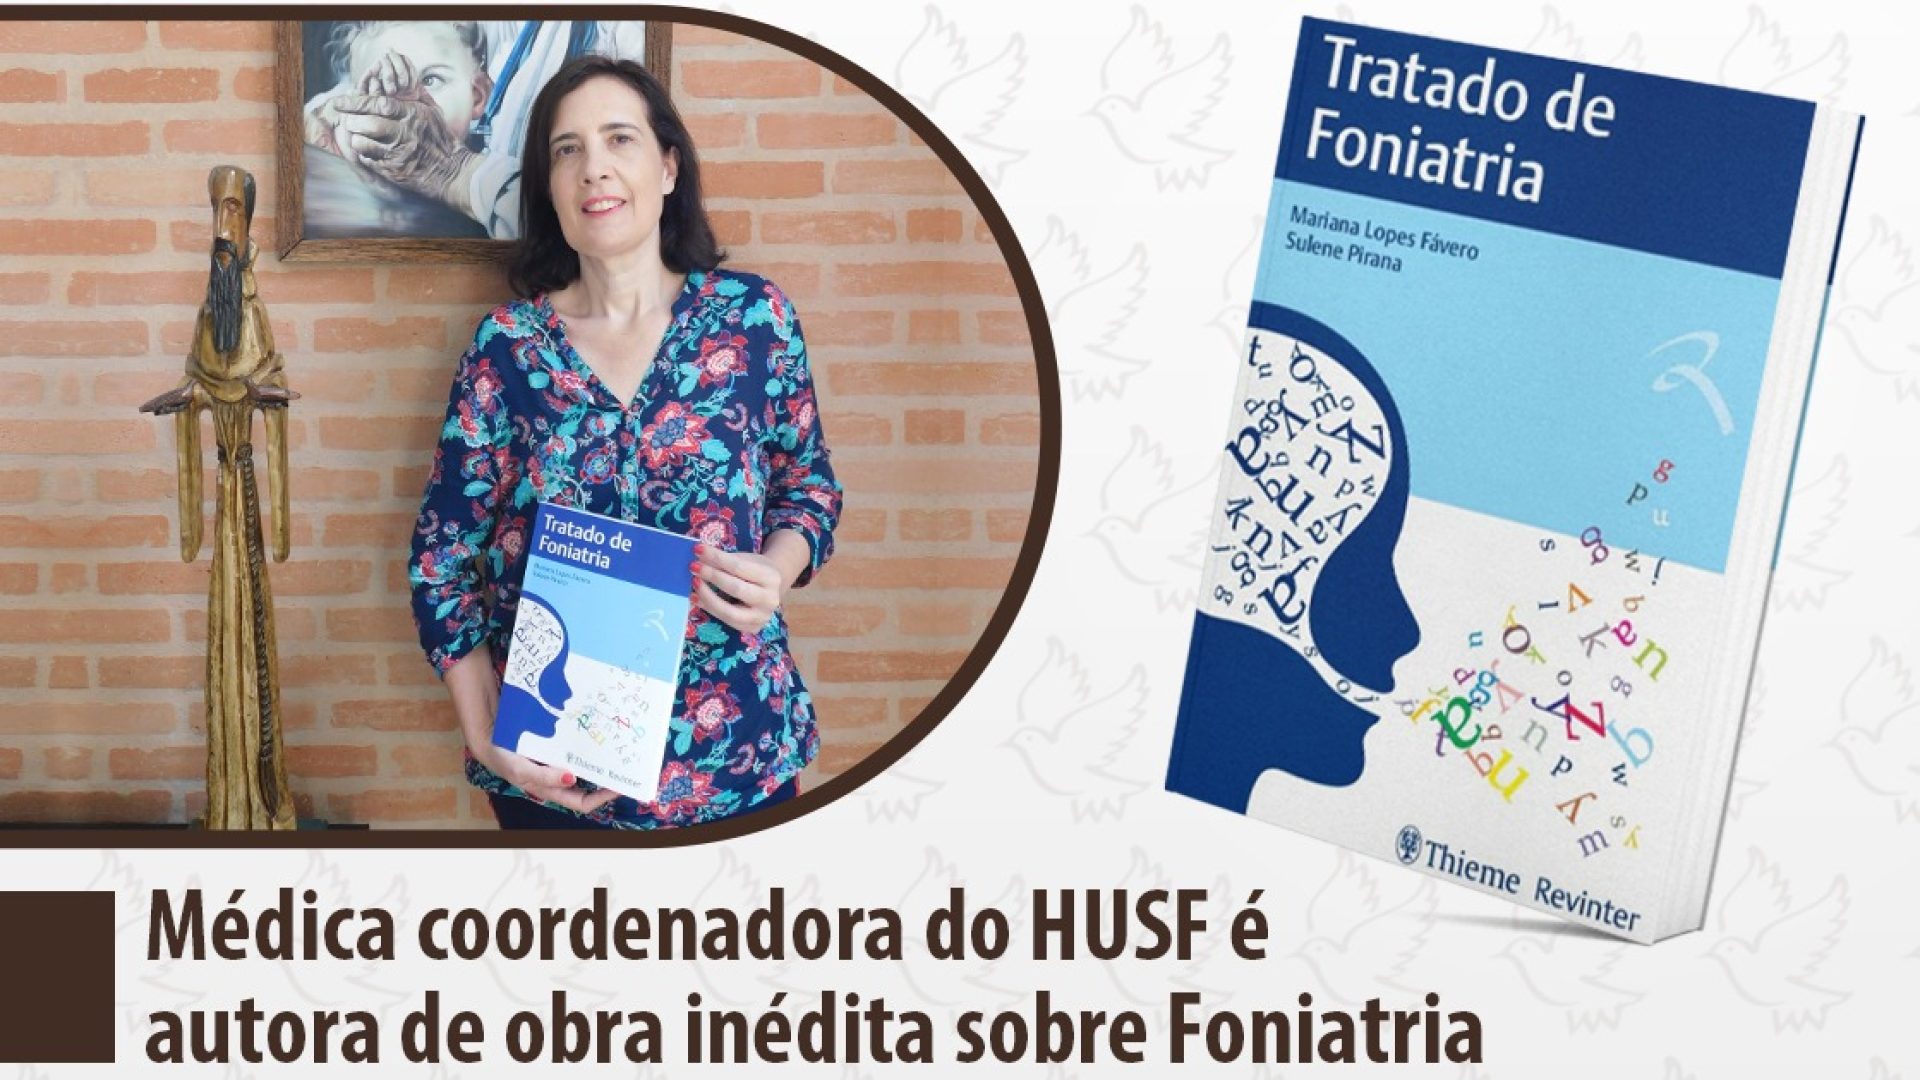 husf_braganca_paulista_sulene_pirana_foniatria